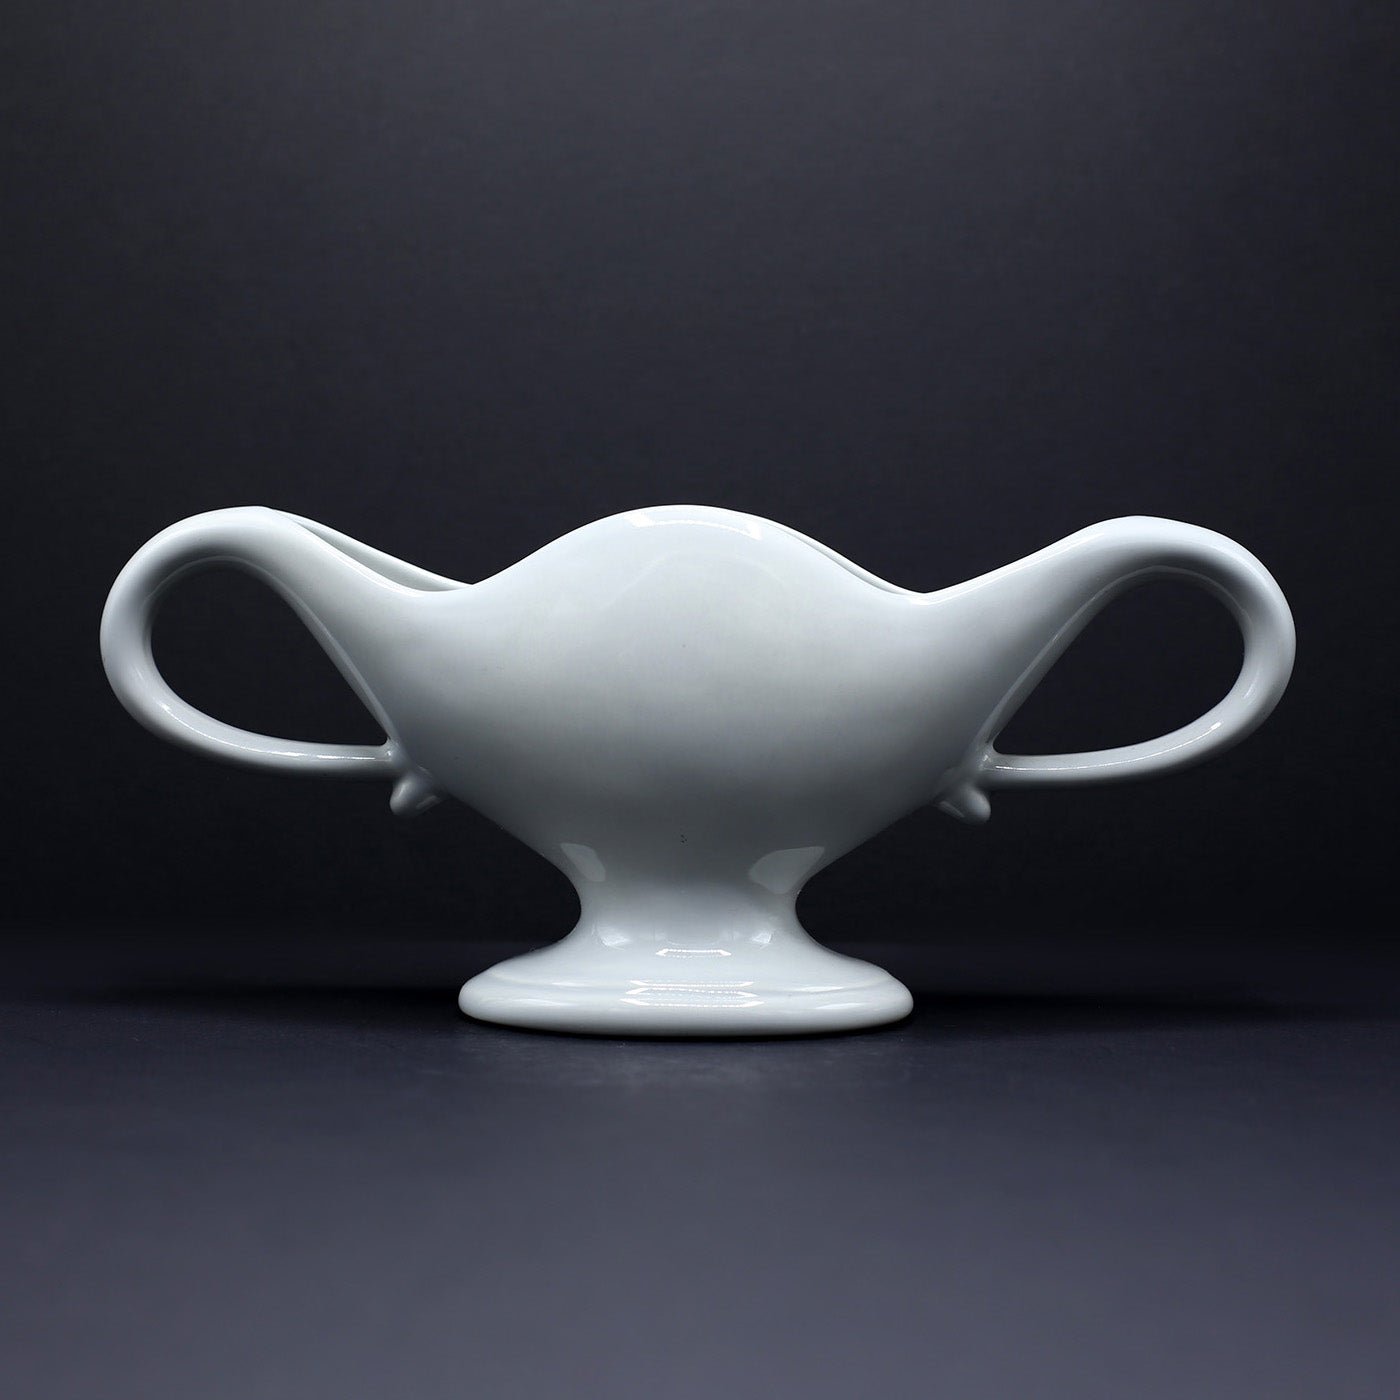 A Collectable Fulham Pottery Mantel Vase - FLORA BLACK